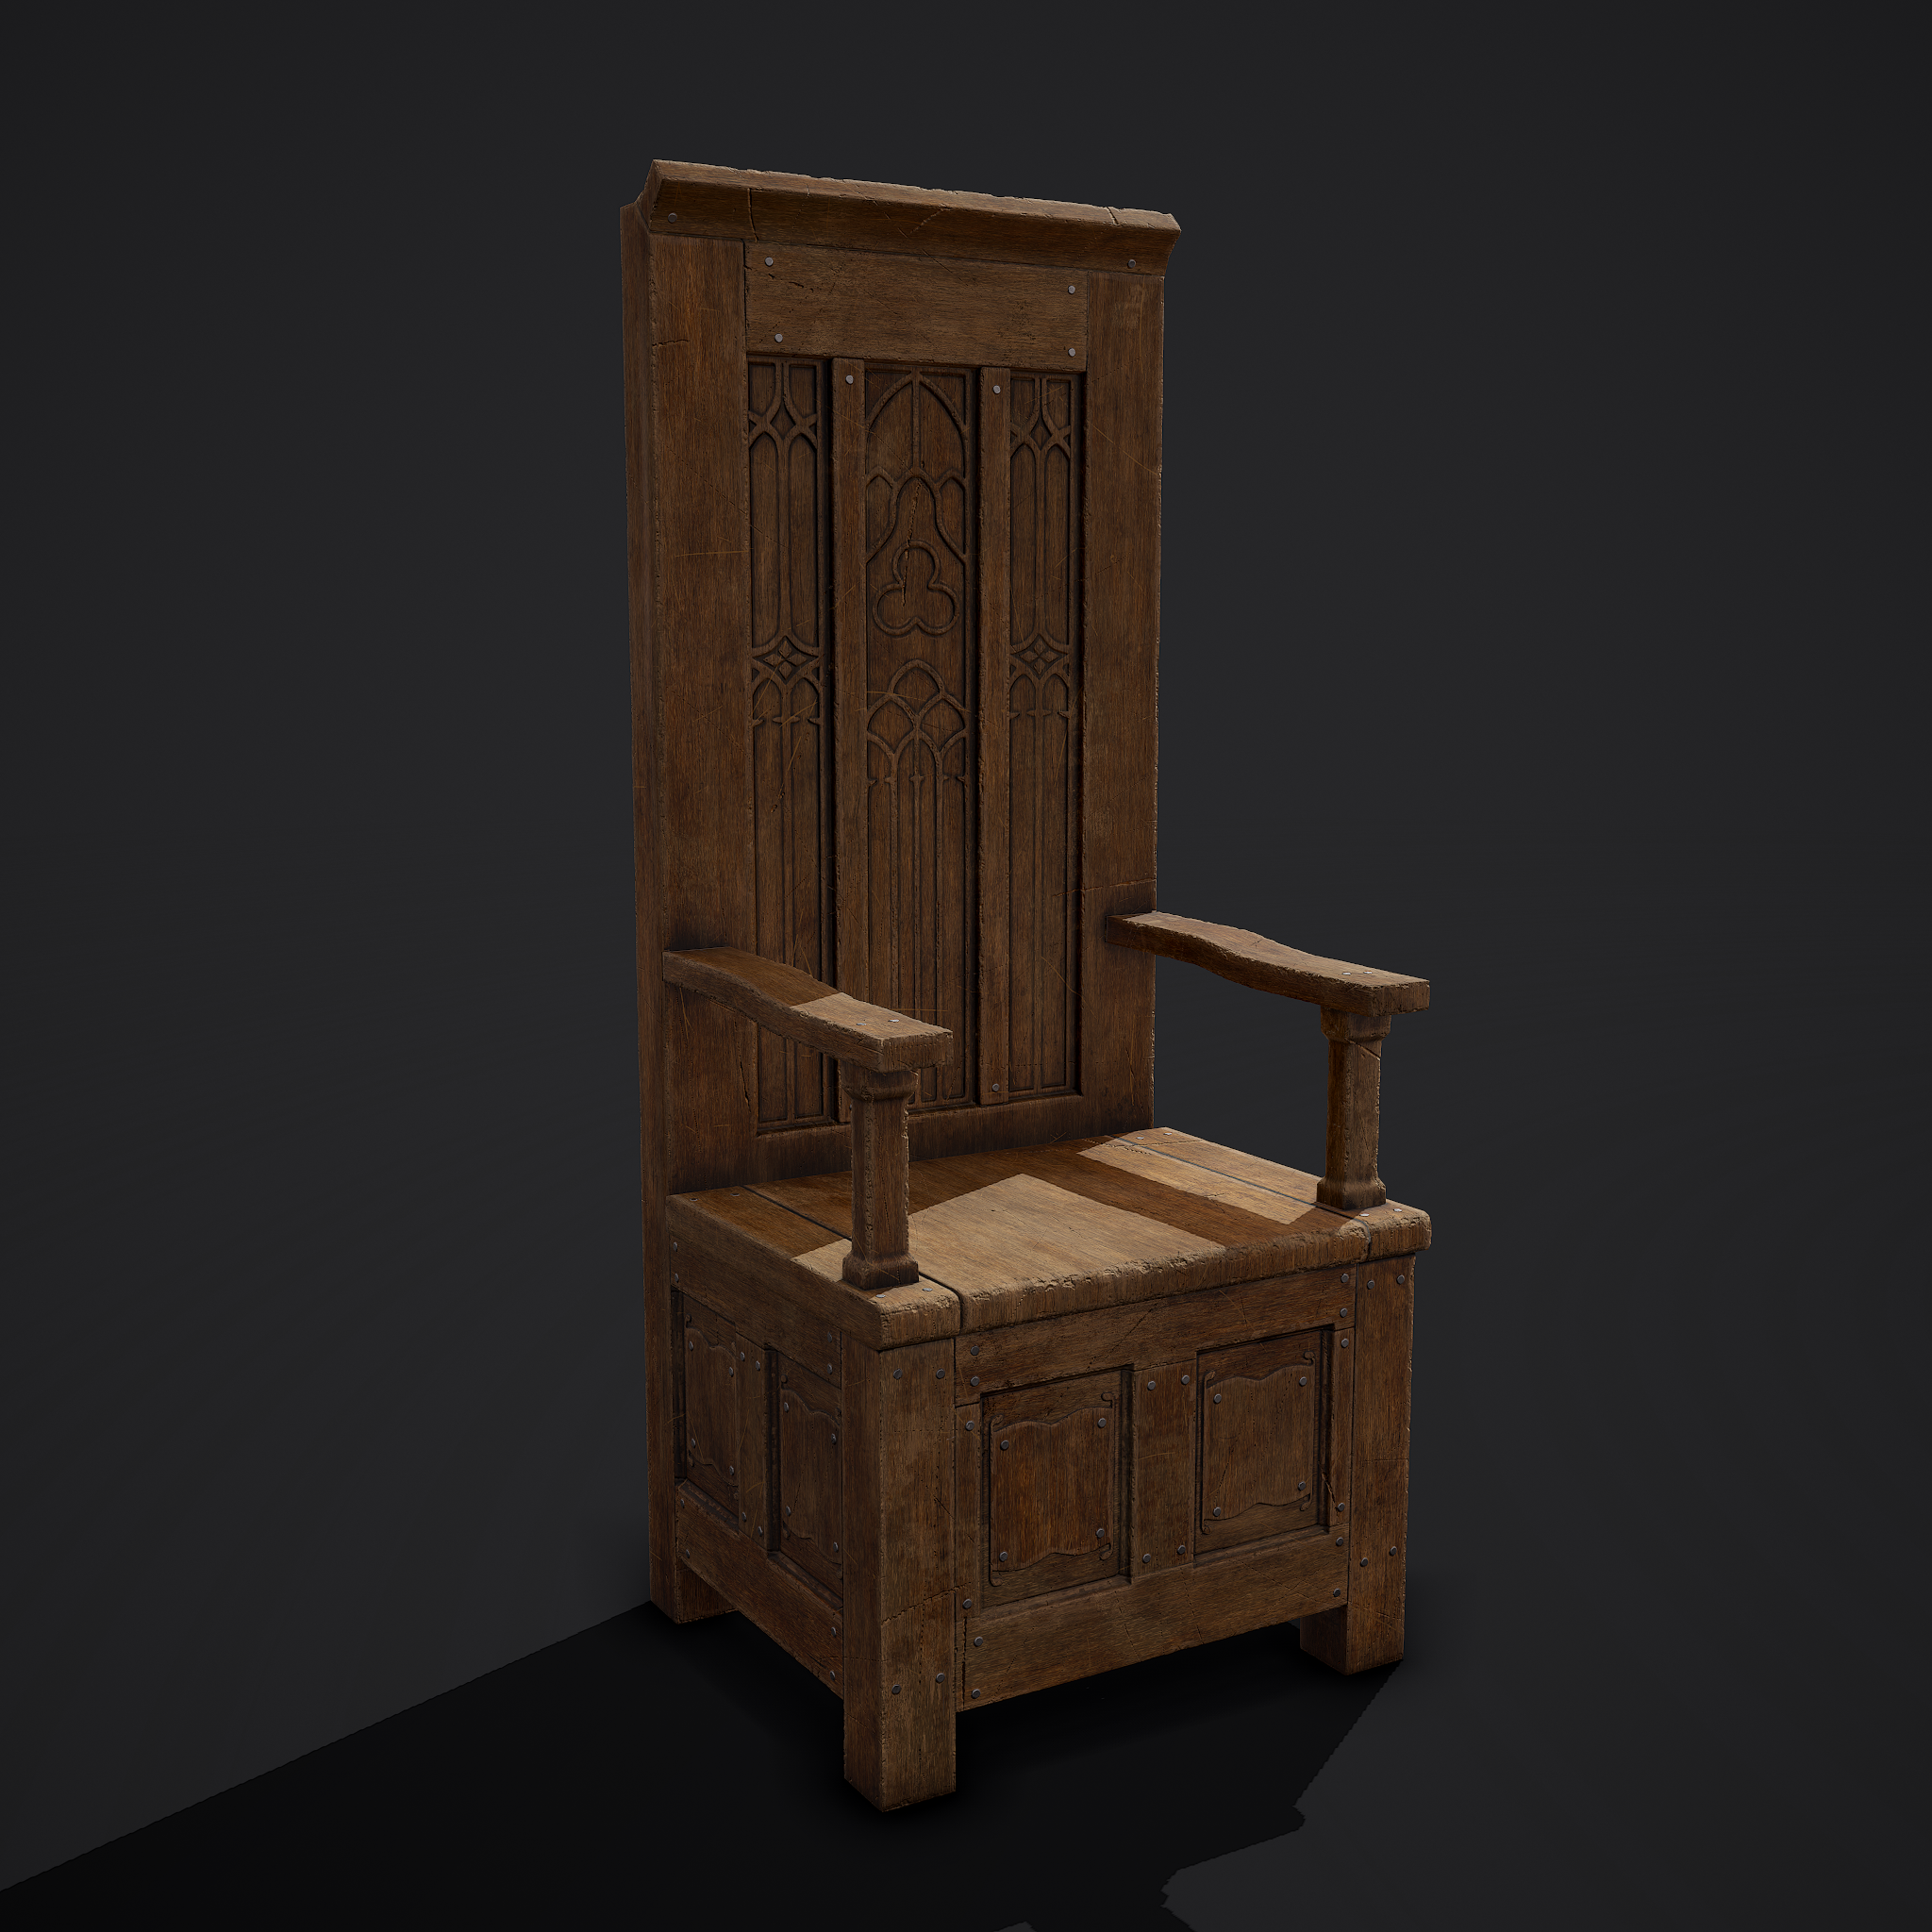 Medieval Royal Chair 